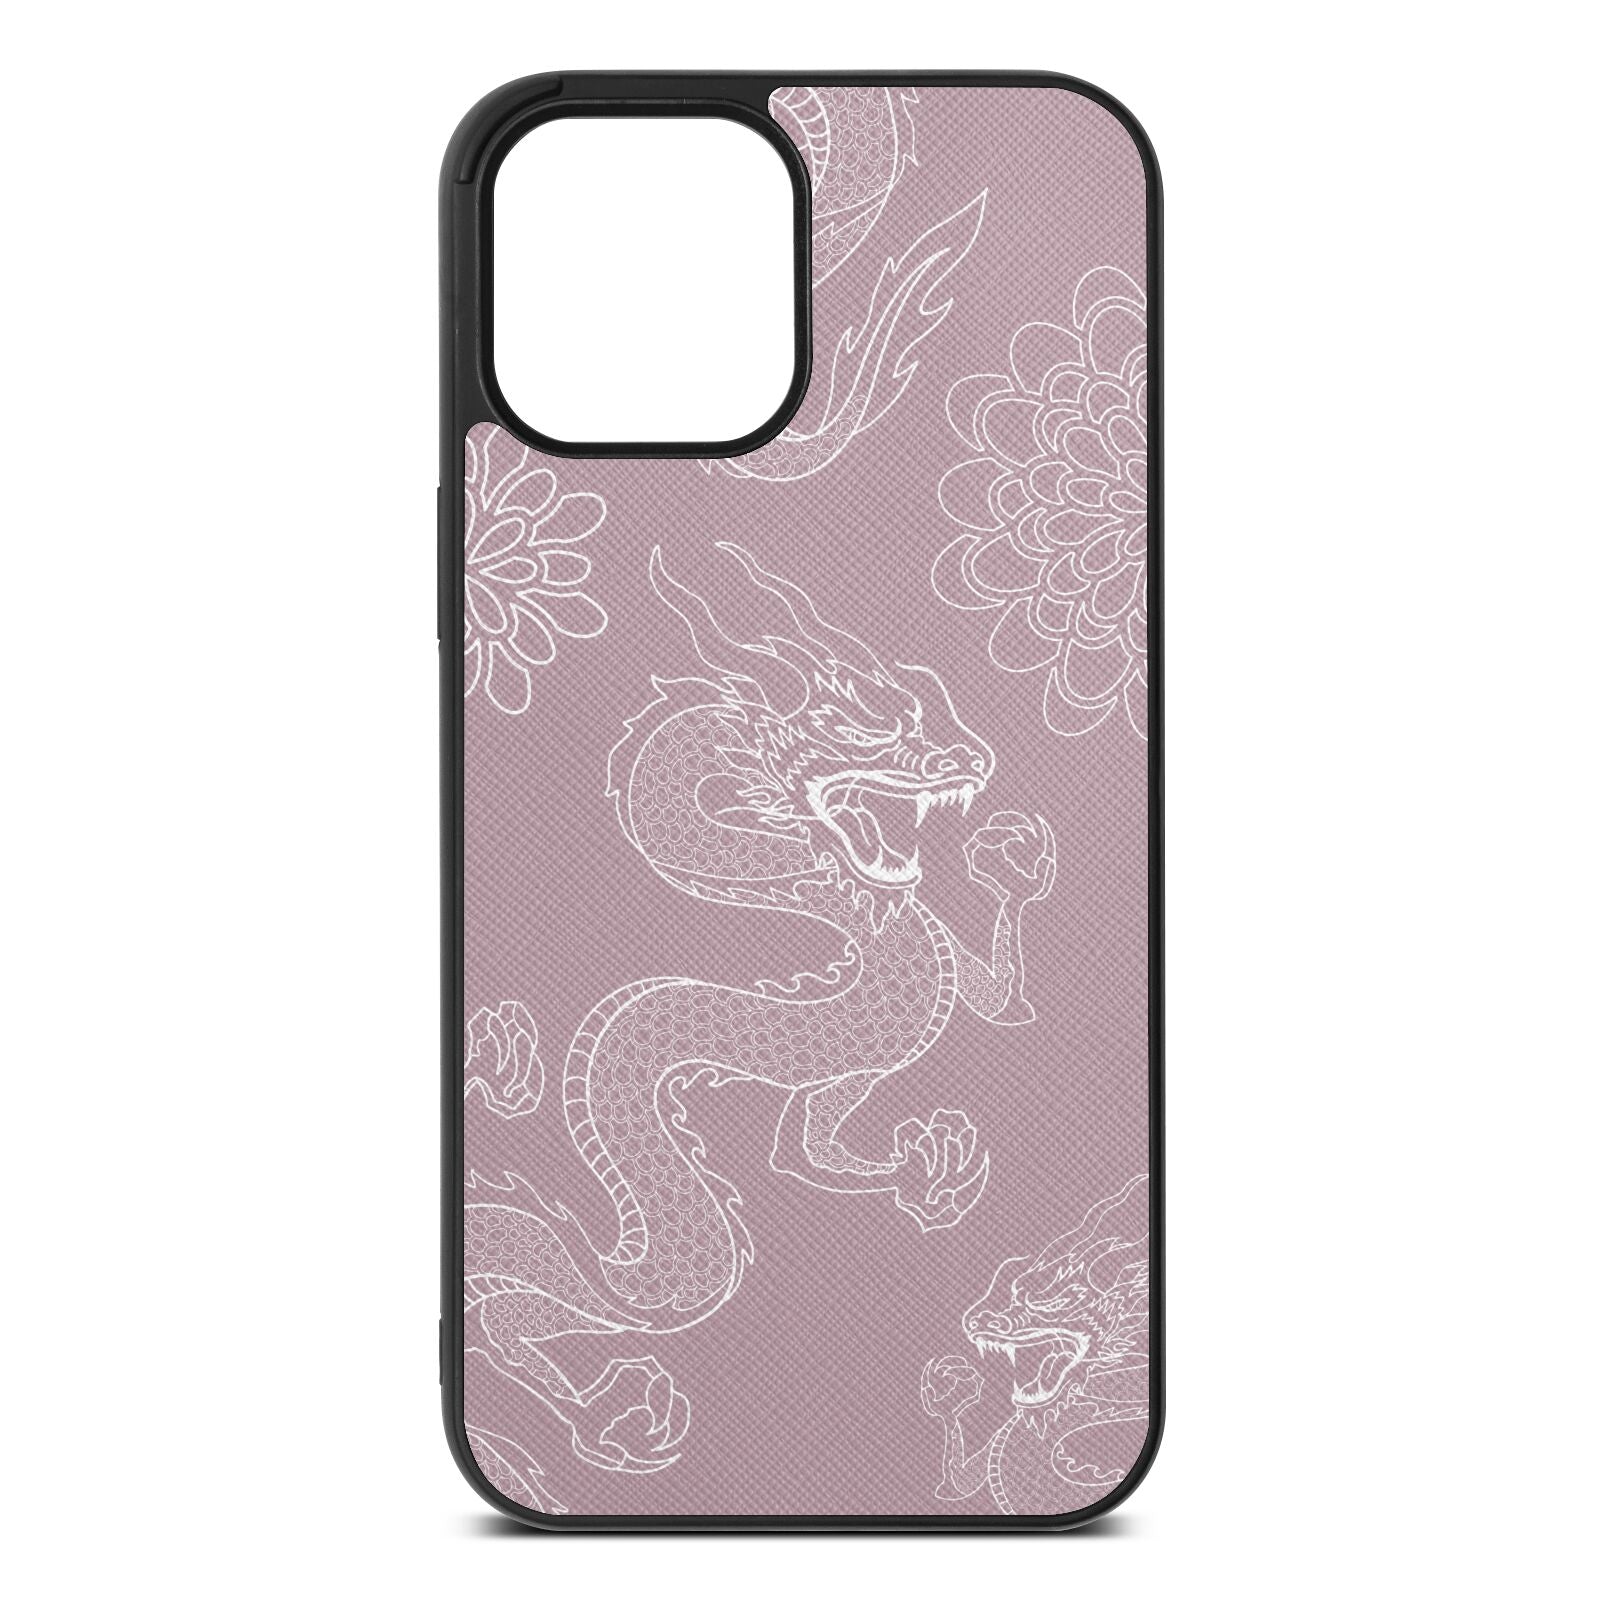 Dragons Lotus Saffiano Leather iPhone 12 Pro Max Case